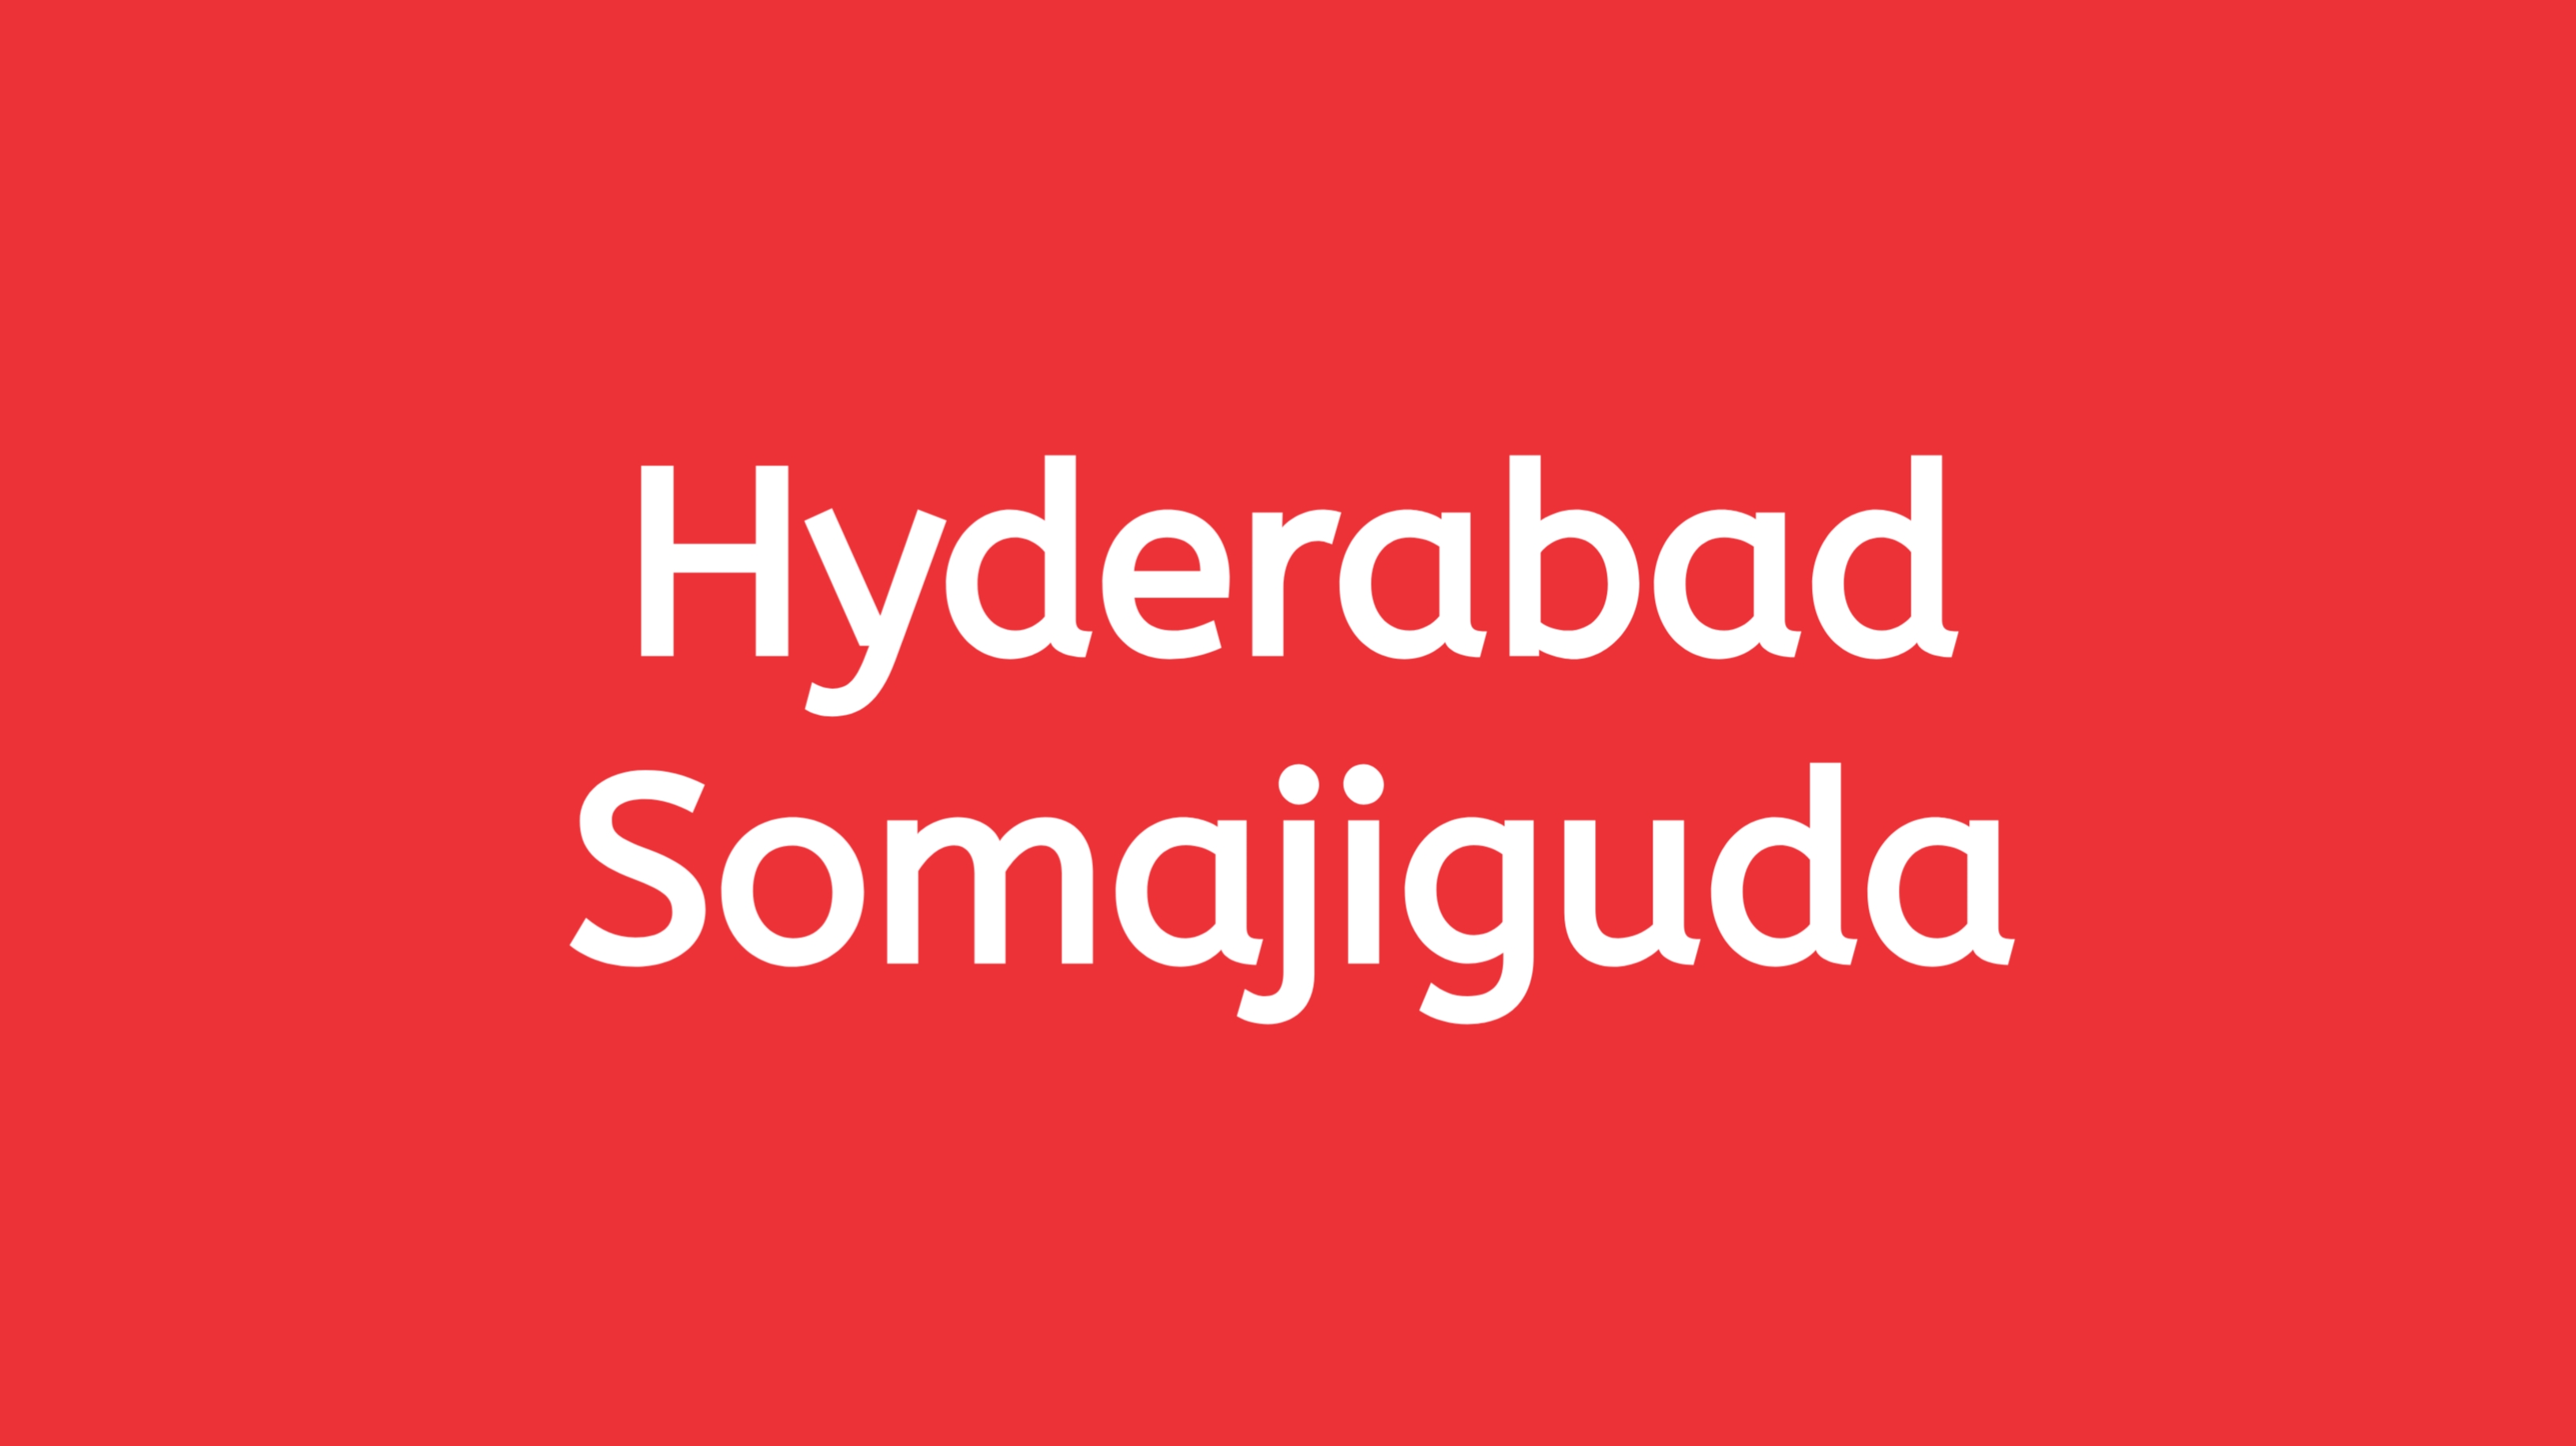 StayFit - Hyderabad - Somajiguda